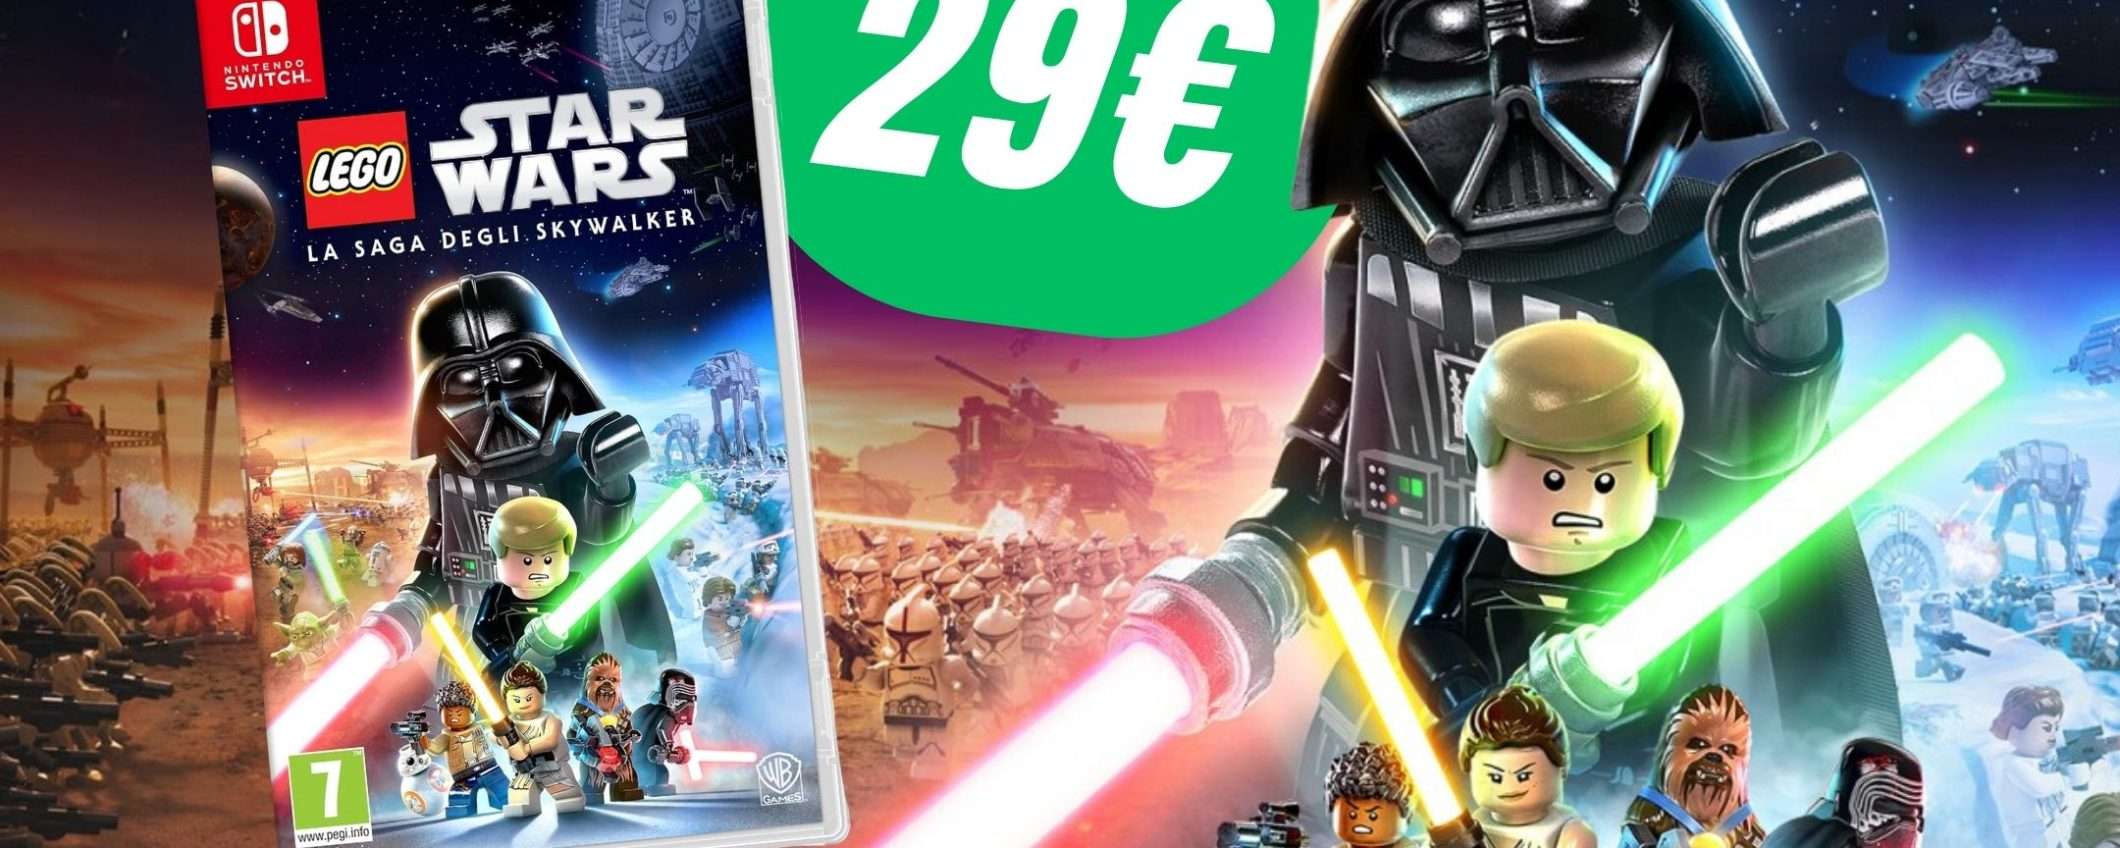 Lego Star Wars: La Saga degli Skywalker per Nintendo Switch è in OFFERTA a 29€!